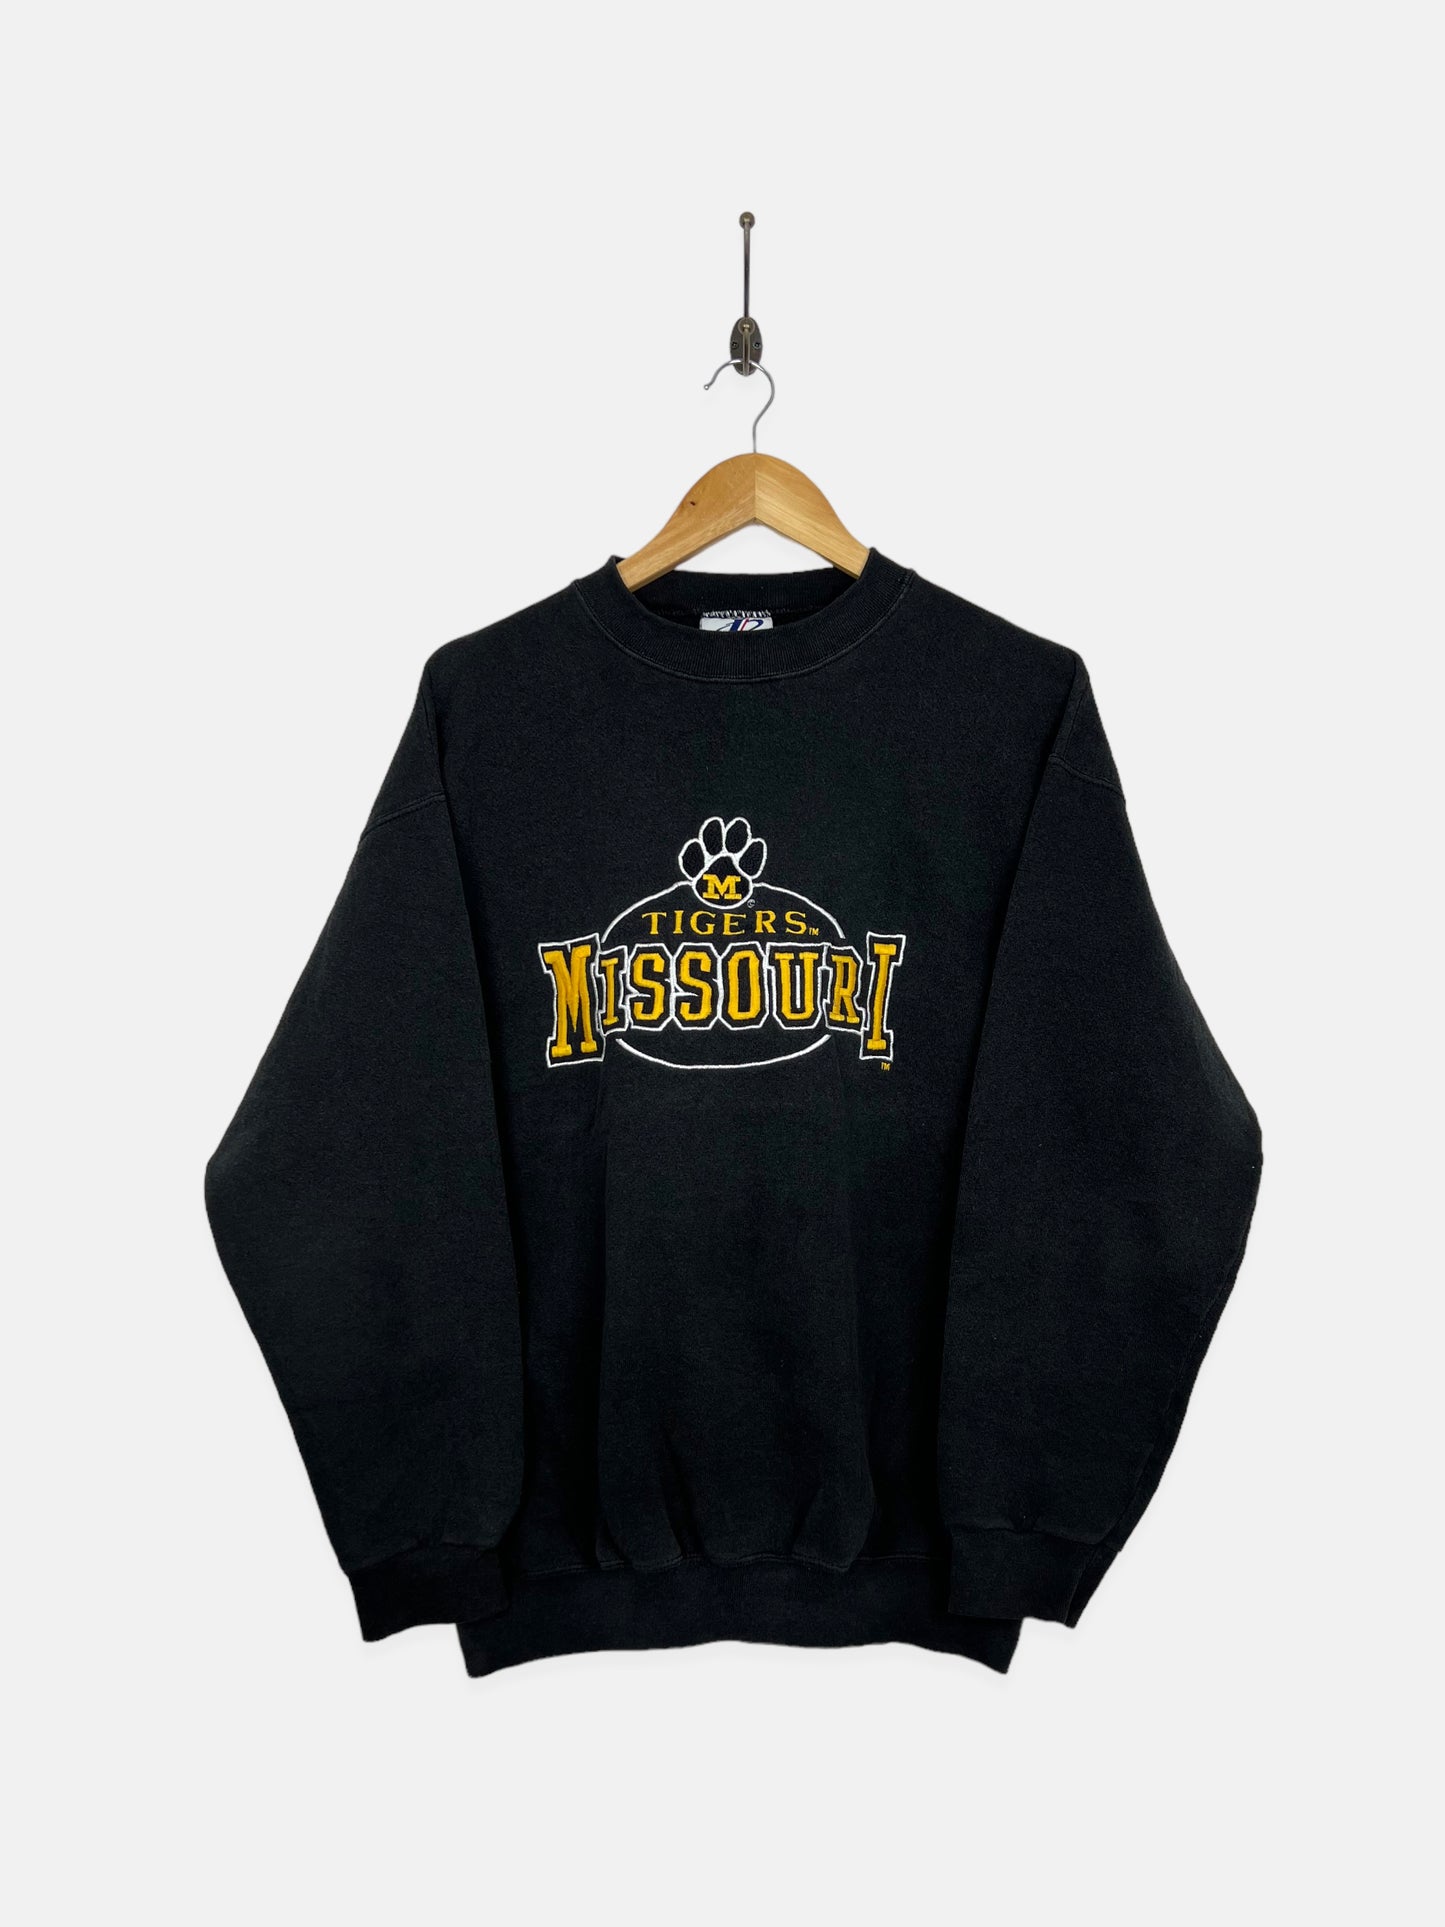 90's Missouri Tigers Embroidered Vintage Sweatshirt Size M